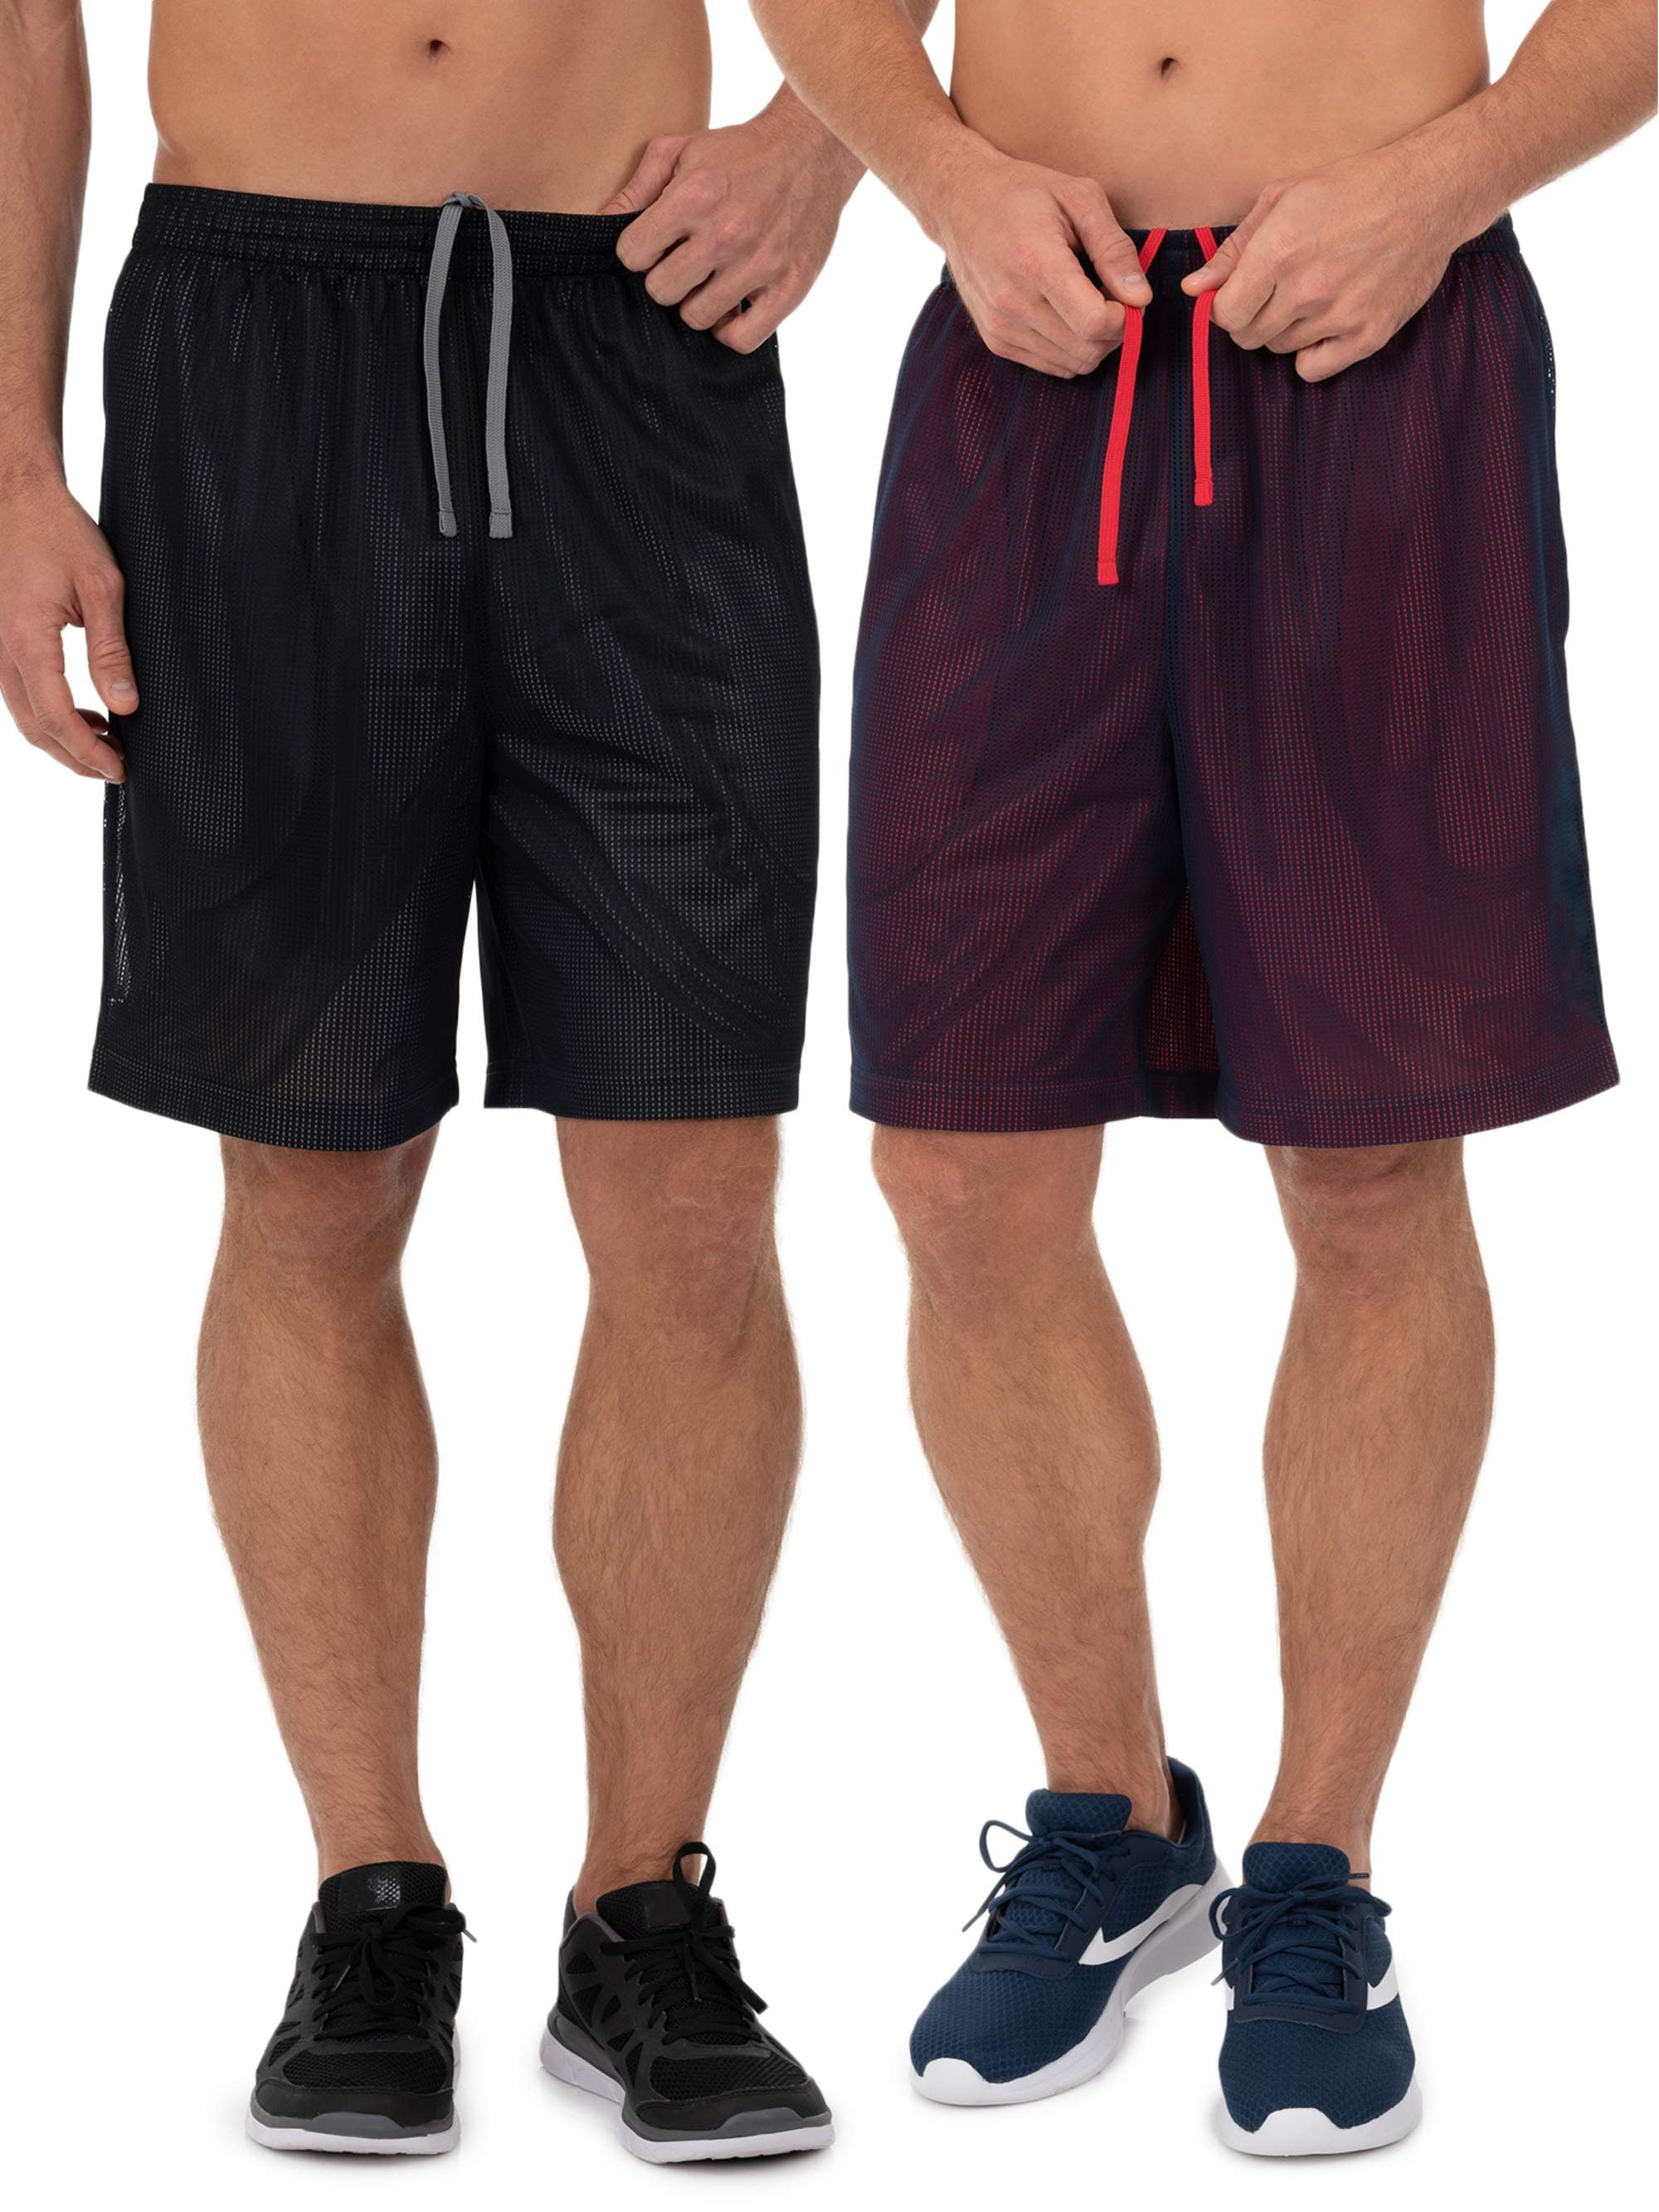 Msmsse Mens Outdoor Sports Shorts Drawstring Elastic Waist Running Workout Shorts with Pocket